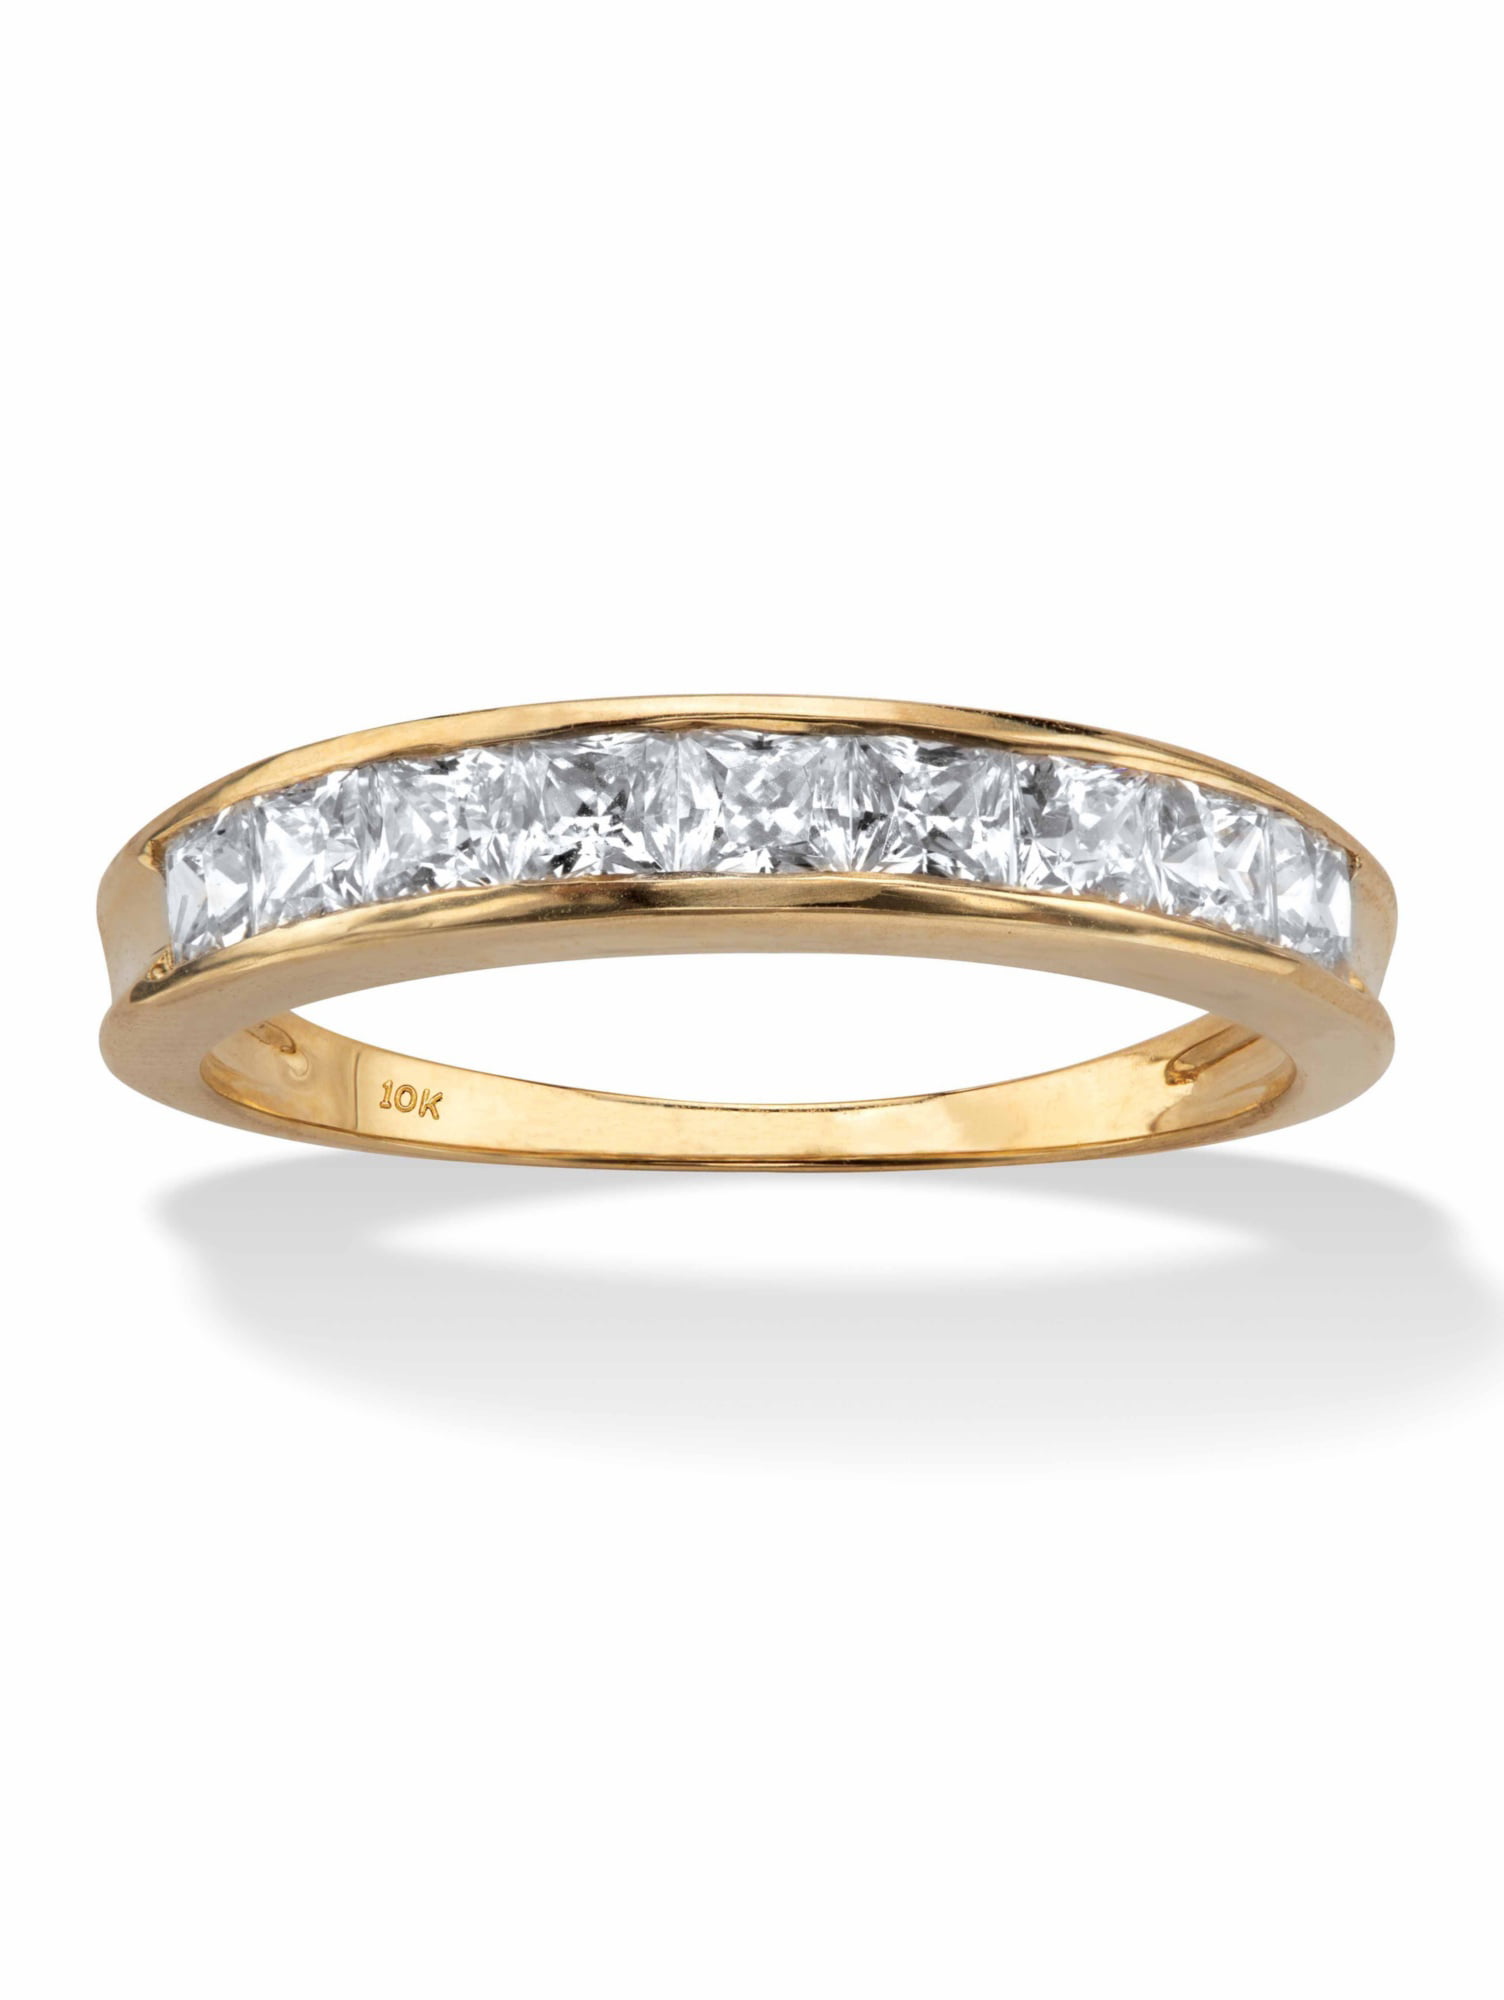 14K .10 CT Diamond Ring Wedding Ring Set 14K Diamond Engagement Ring Wedding Band Set Vintage Size 7 Forever Yours Diamond Wedding Rings